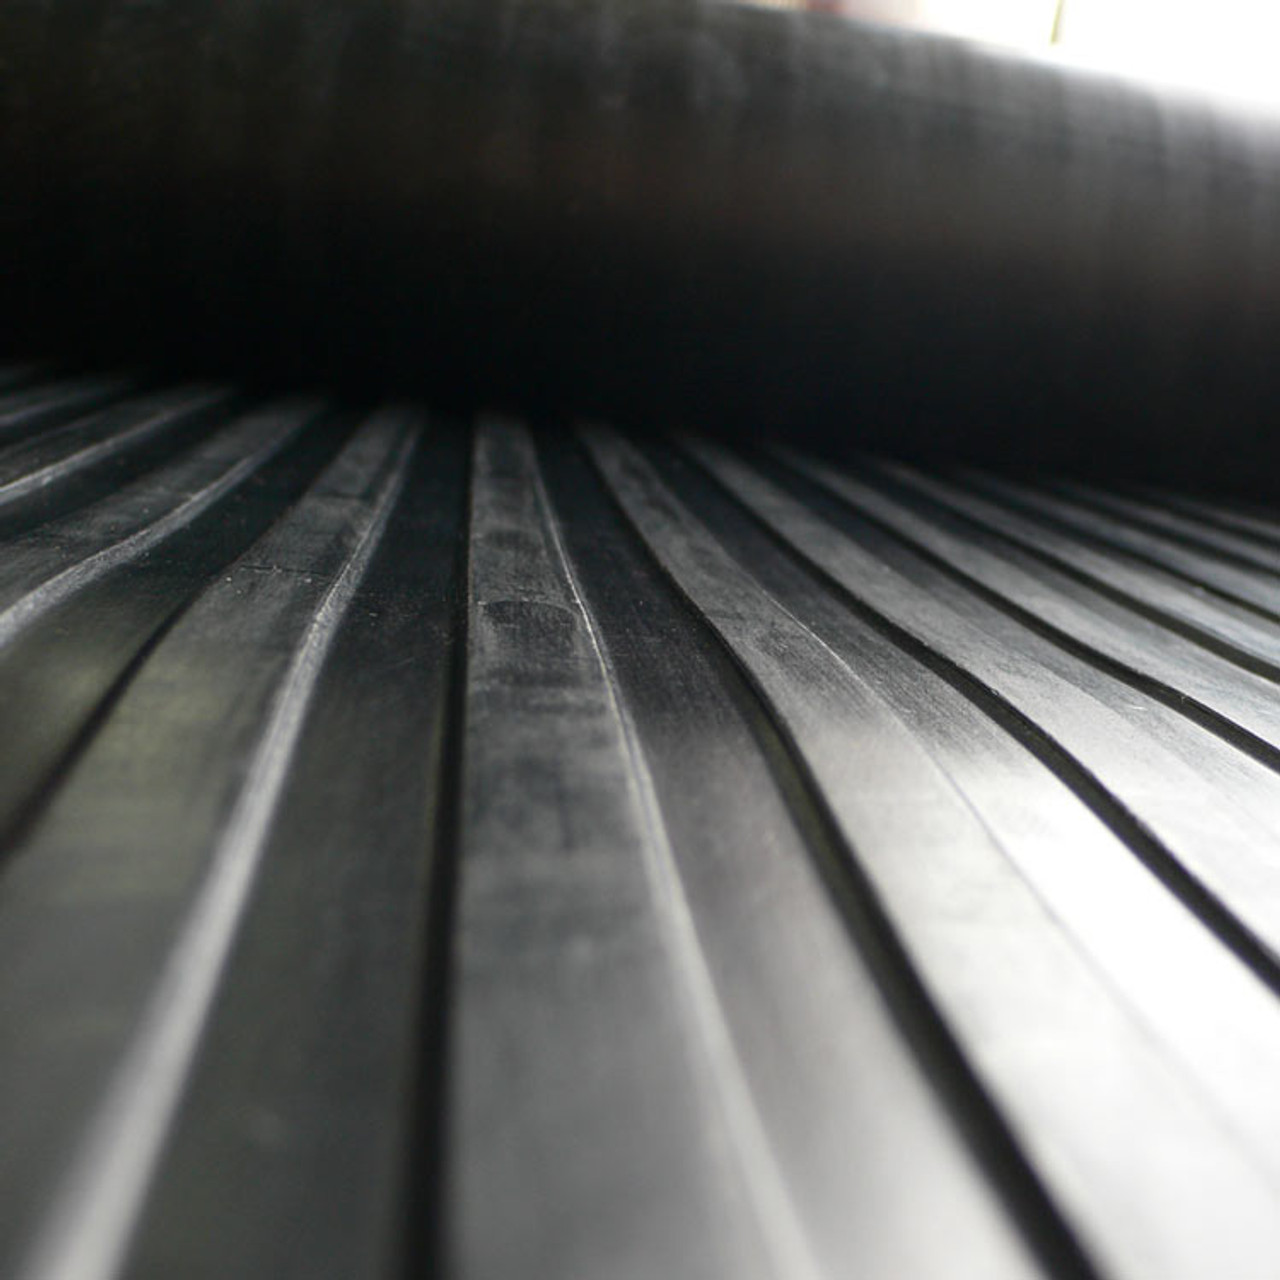 Corrugated Rib Runners, Corrugated Rubber Mat in Stock - ULINE